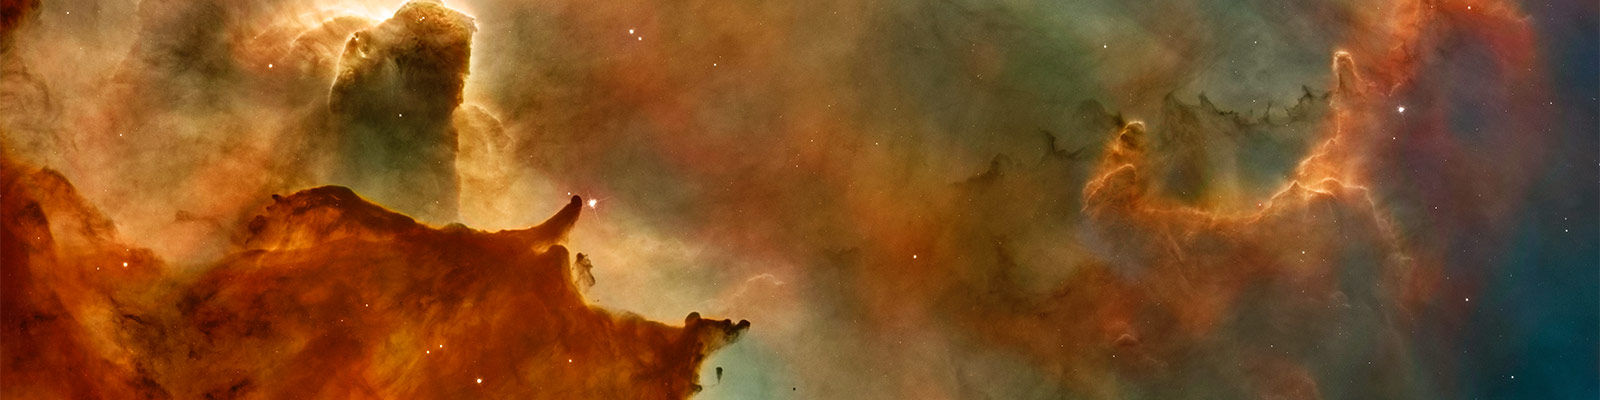 A nebulae